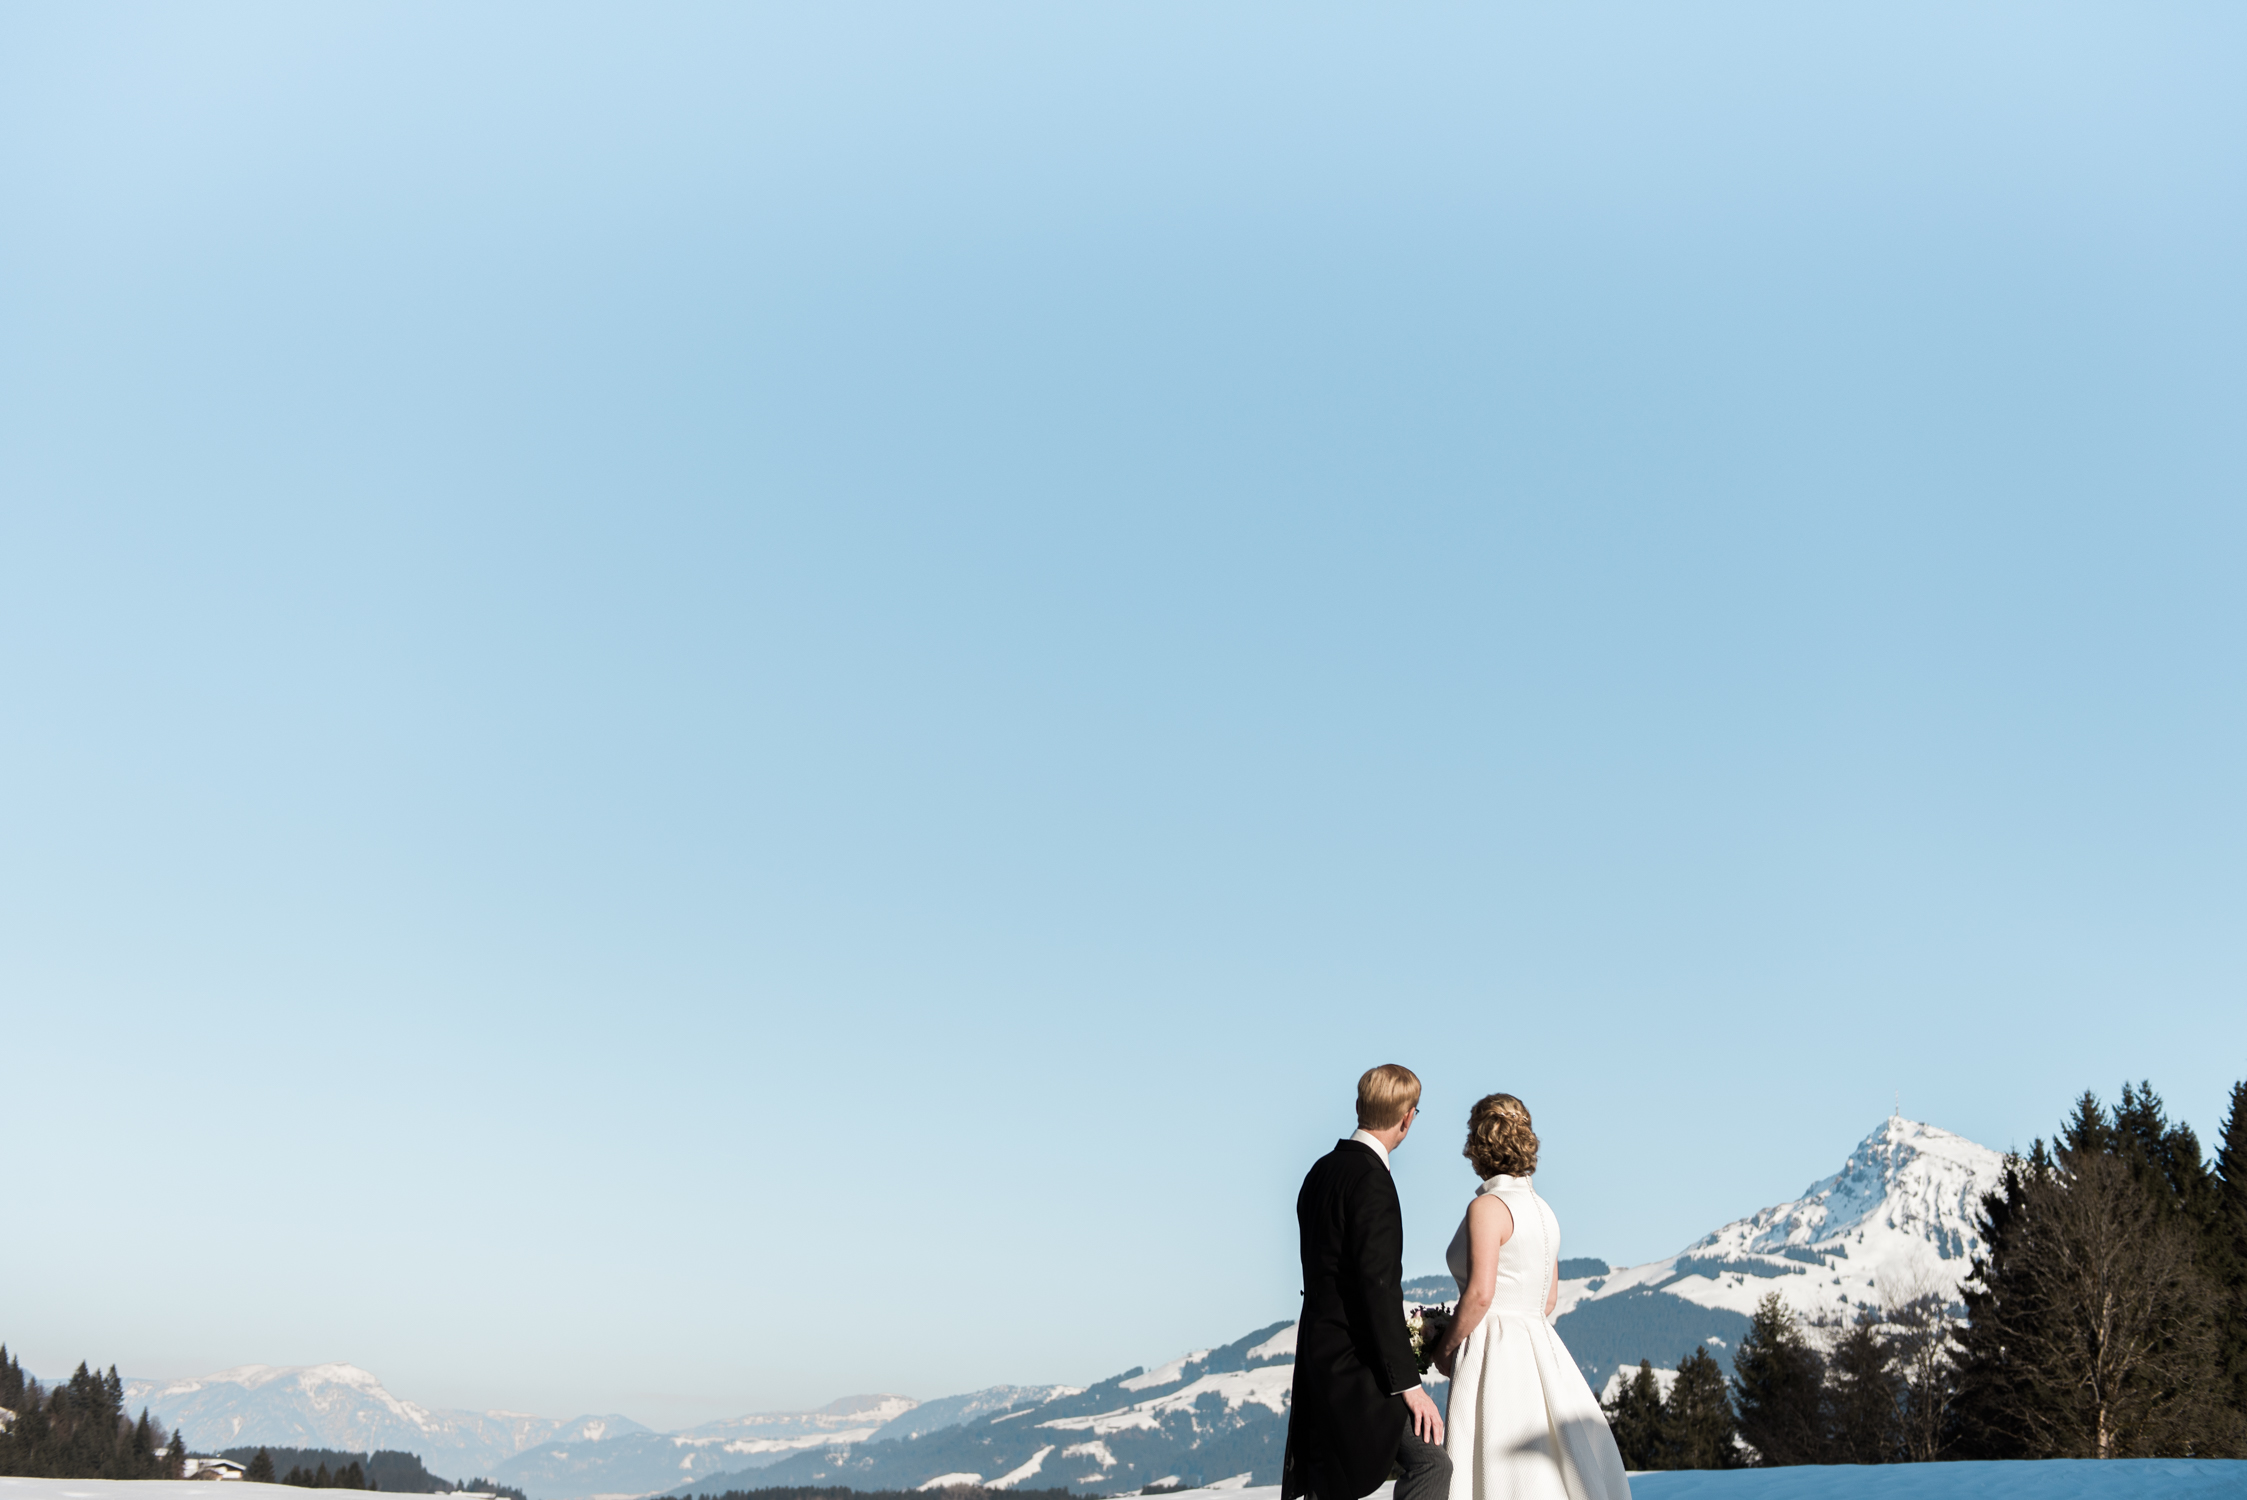 A wedding in tyrol, Austria photographed by a detsination wedding photographer